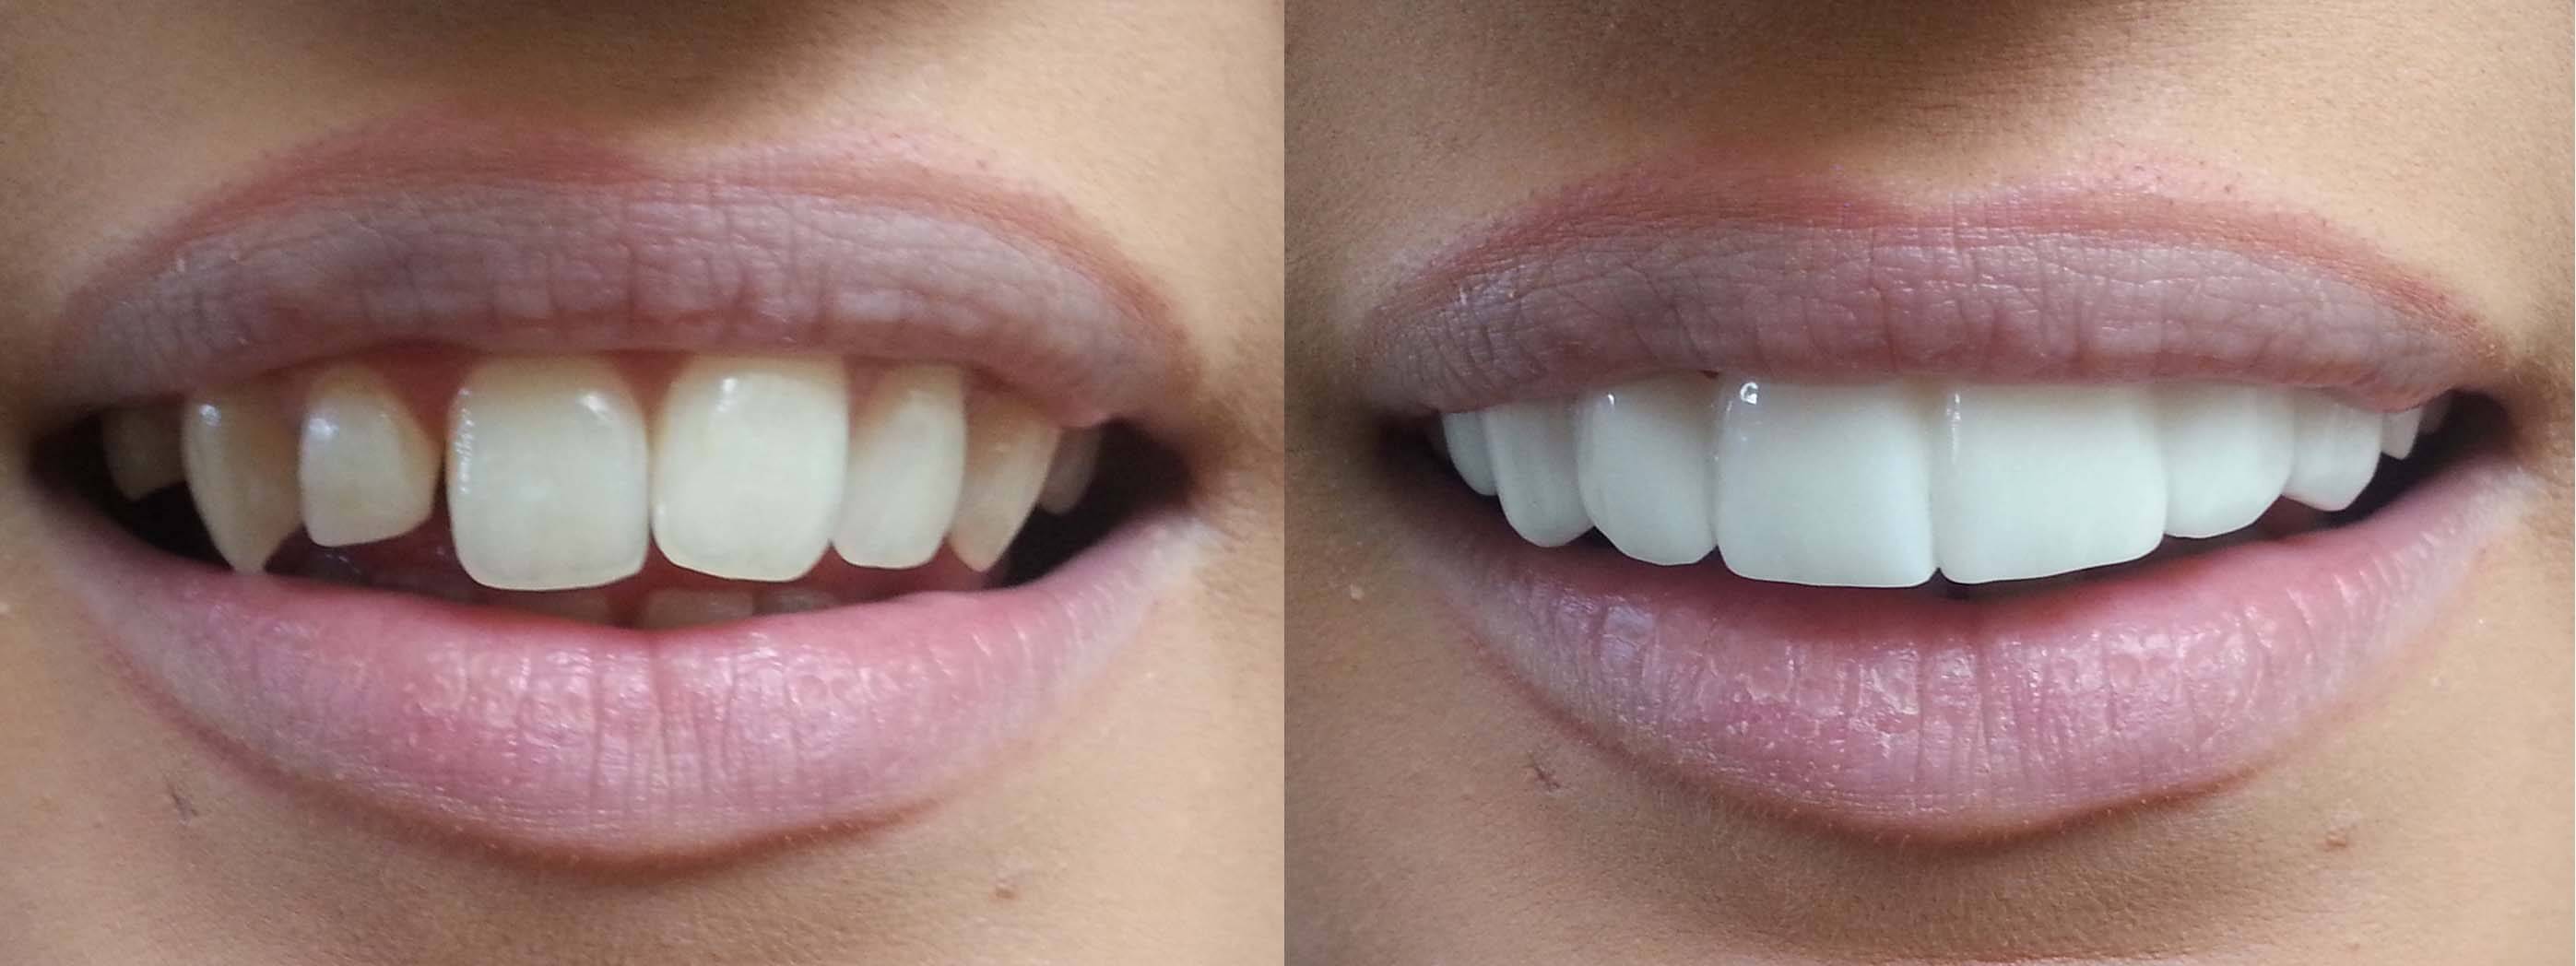 veneers porcelain veneer dental tooth before clip much laminate caps shade cosmetic bleach treatment crowns